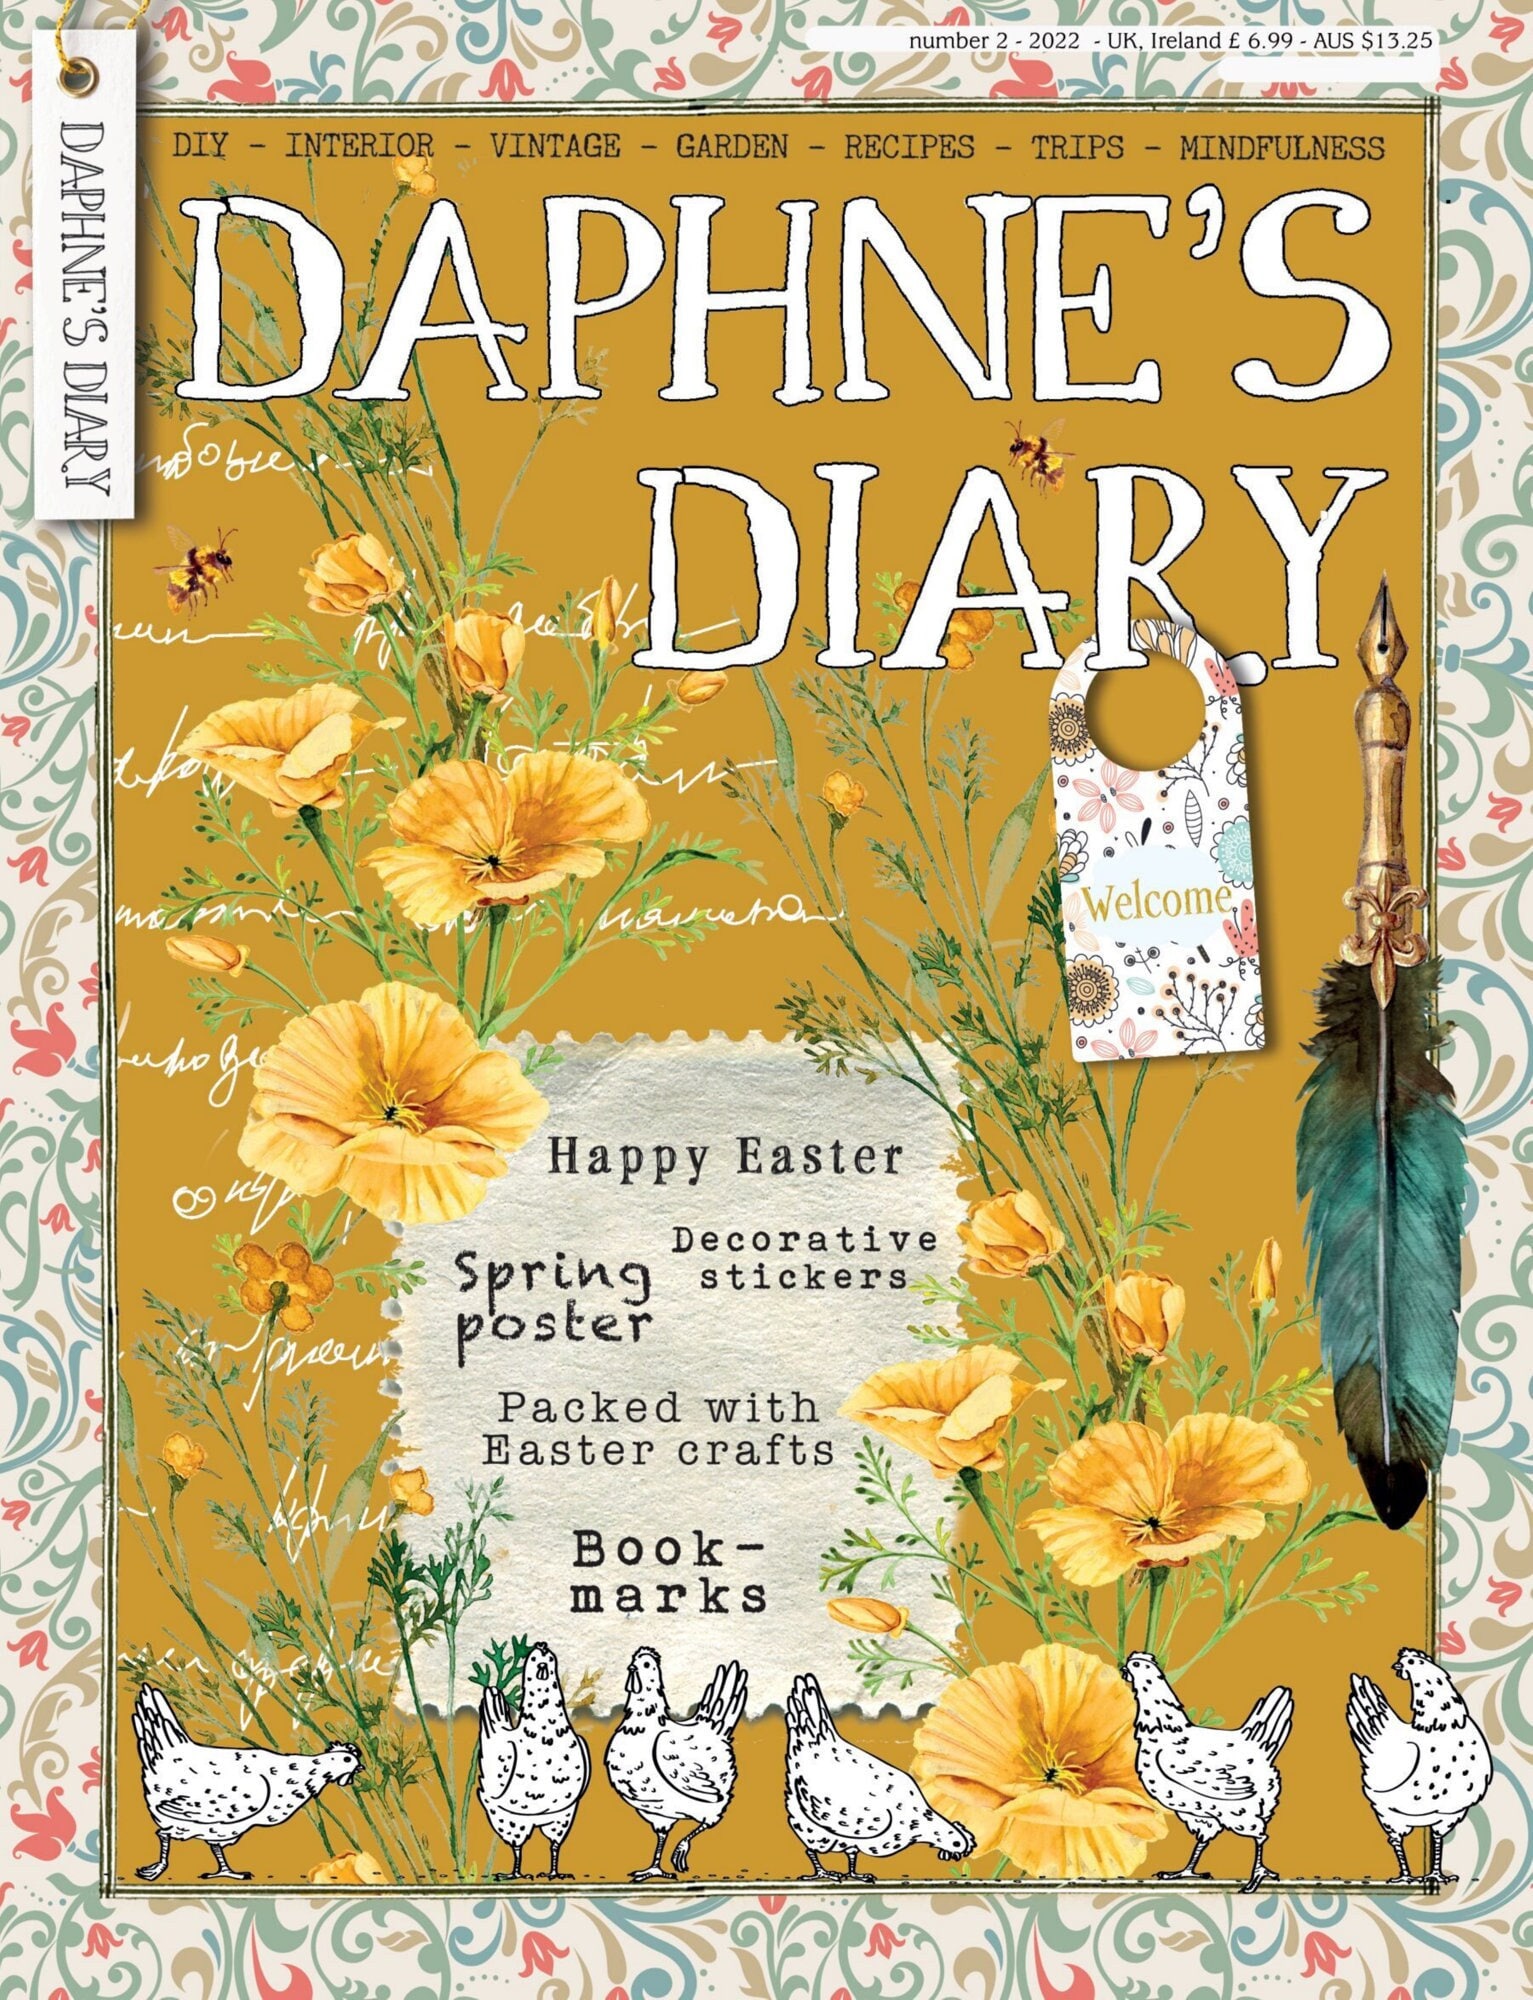 Daphne's Diary Number 7 Magazine Winter 2020: Daphne's Diary